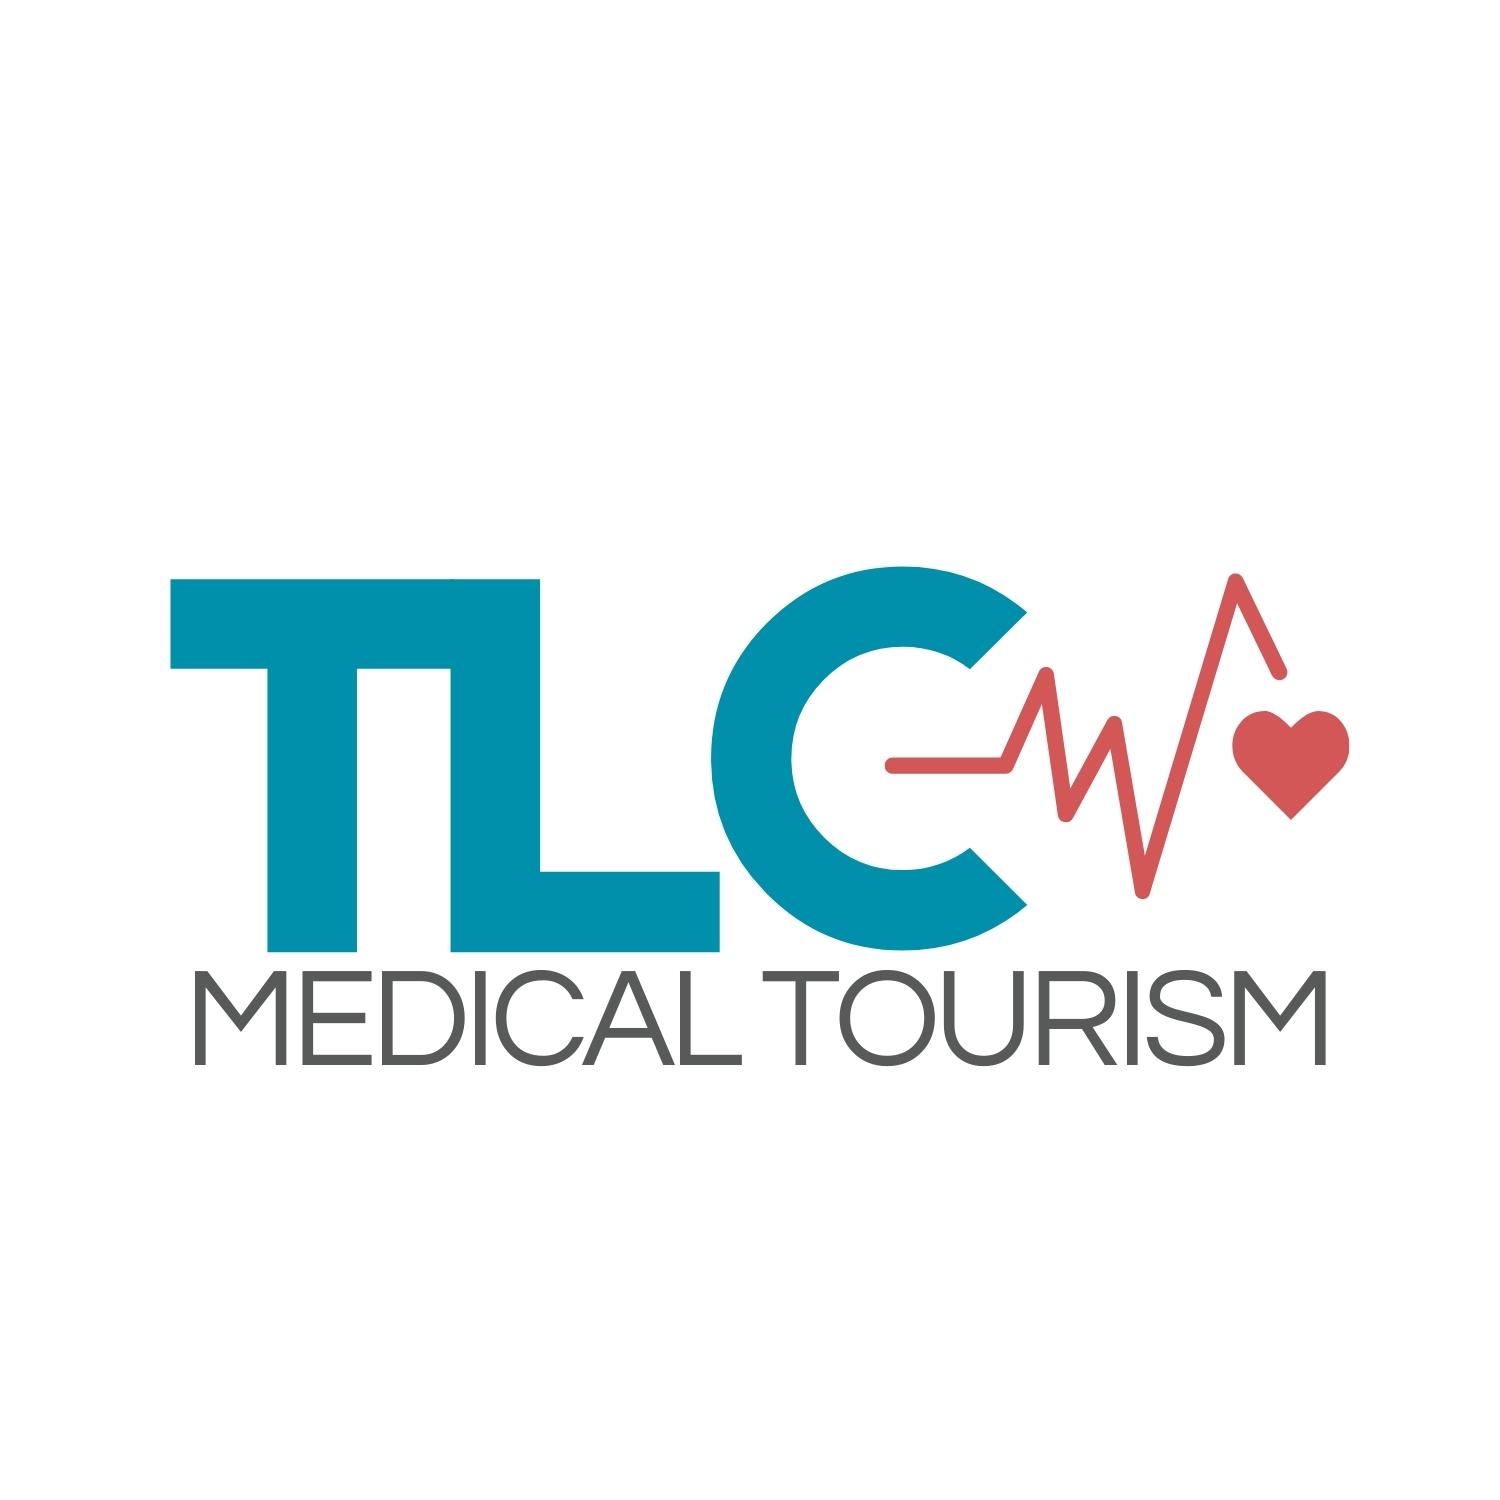 TLC Medical Tourism